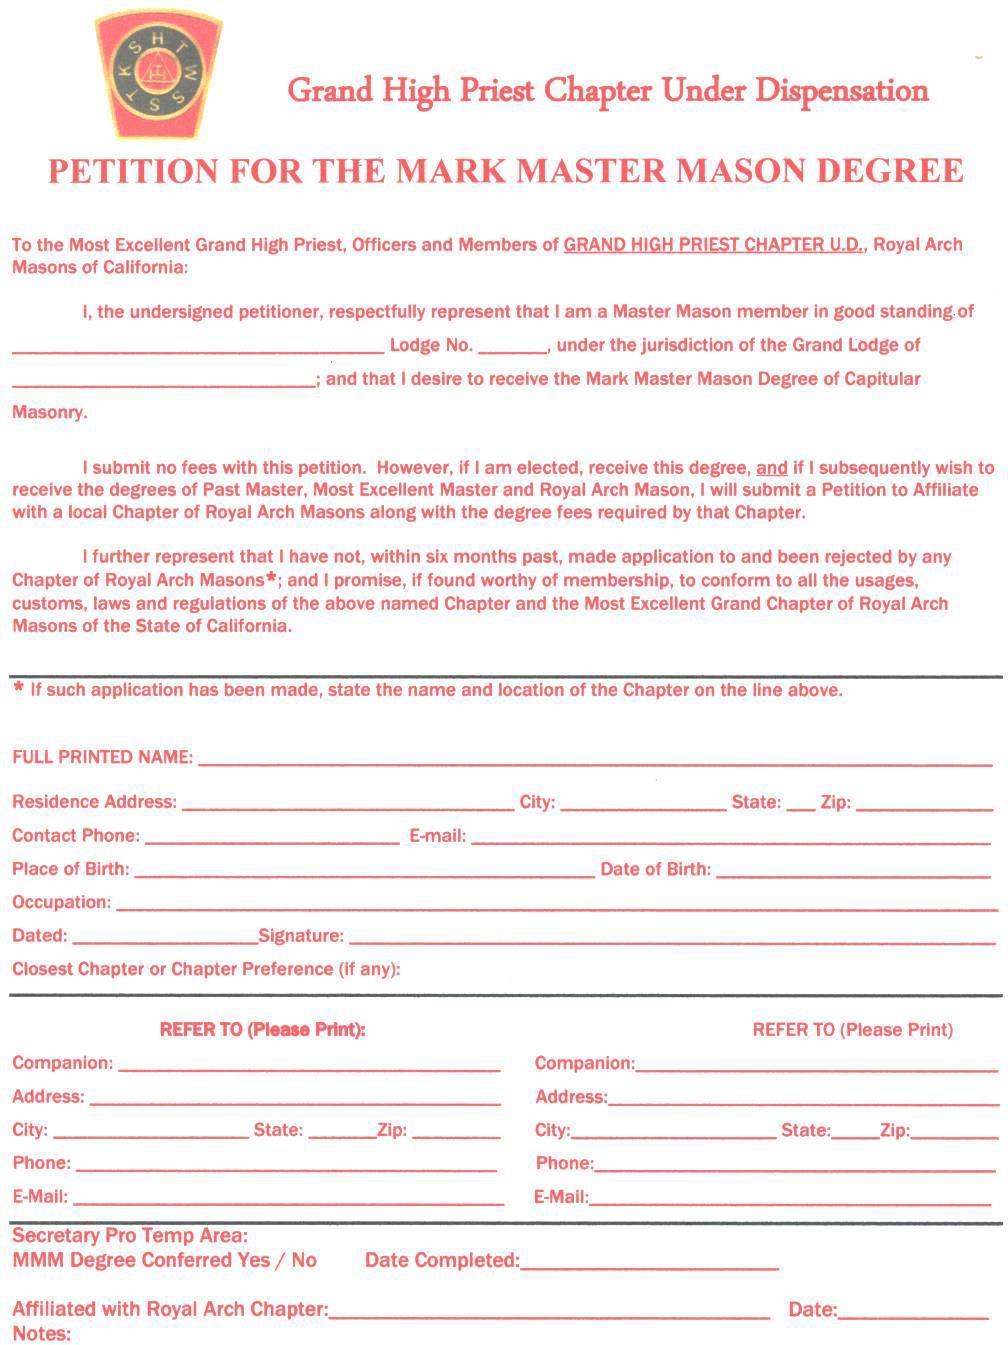 Mark Master Petition October